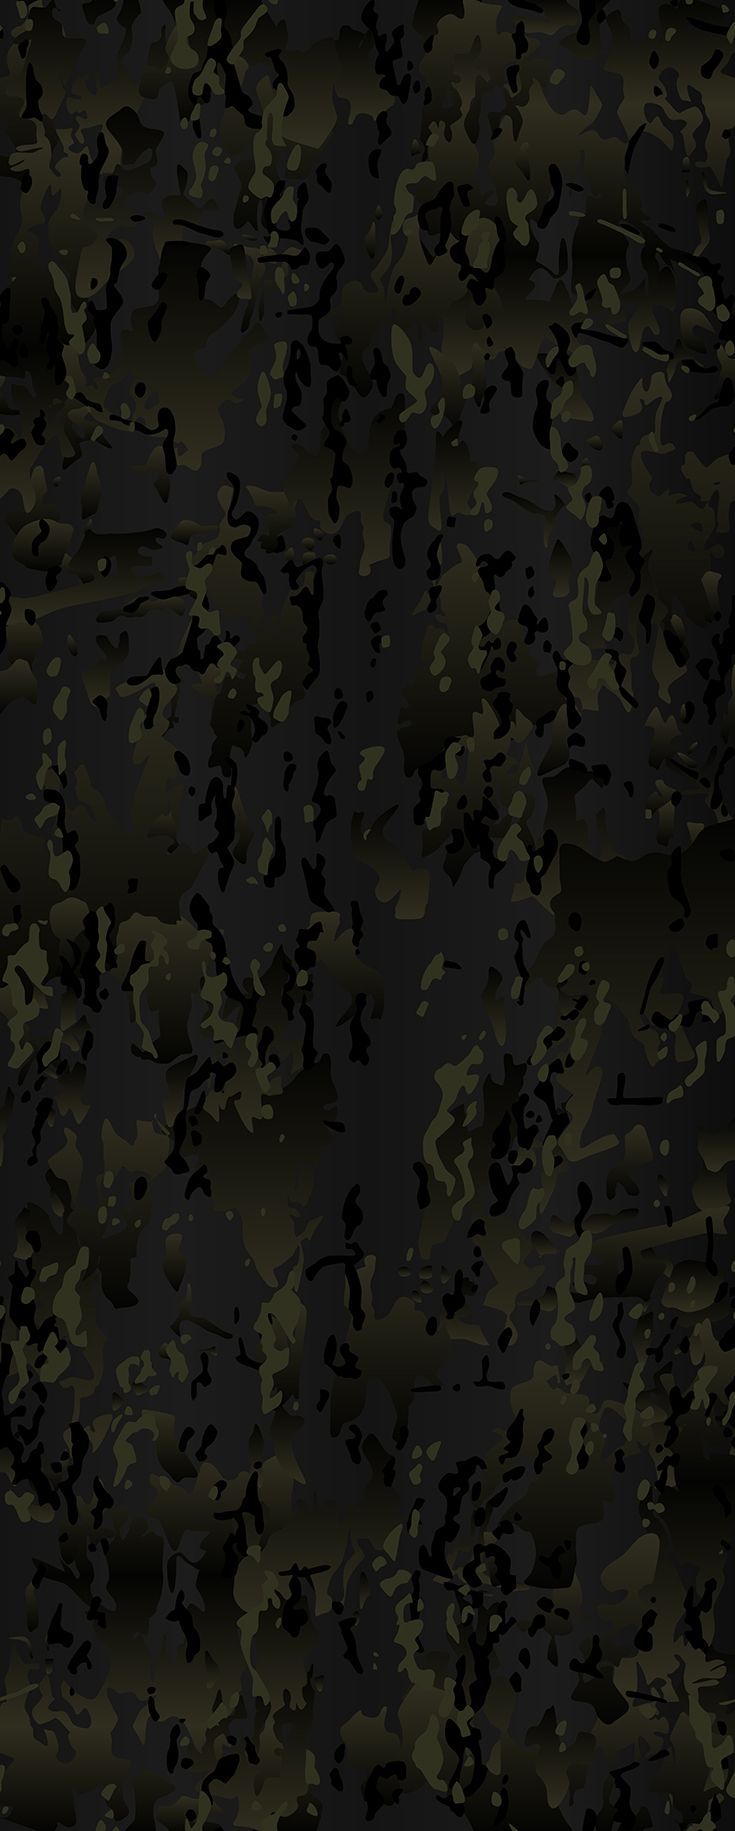 OCP Black vector camouflage pattern for printing, scorpion, army, uniform, print, texture, military camo, black, night, urban. Camo wallpaper, Camouflage wallpaper, Multicam black